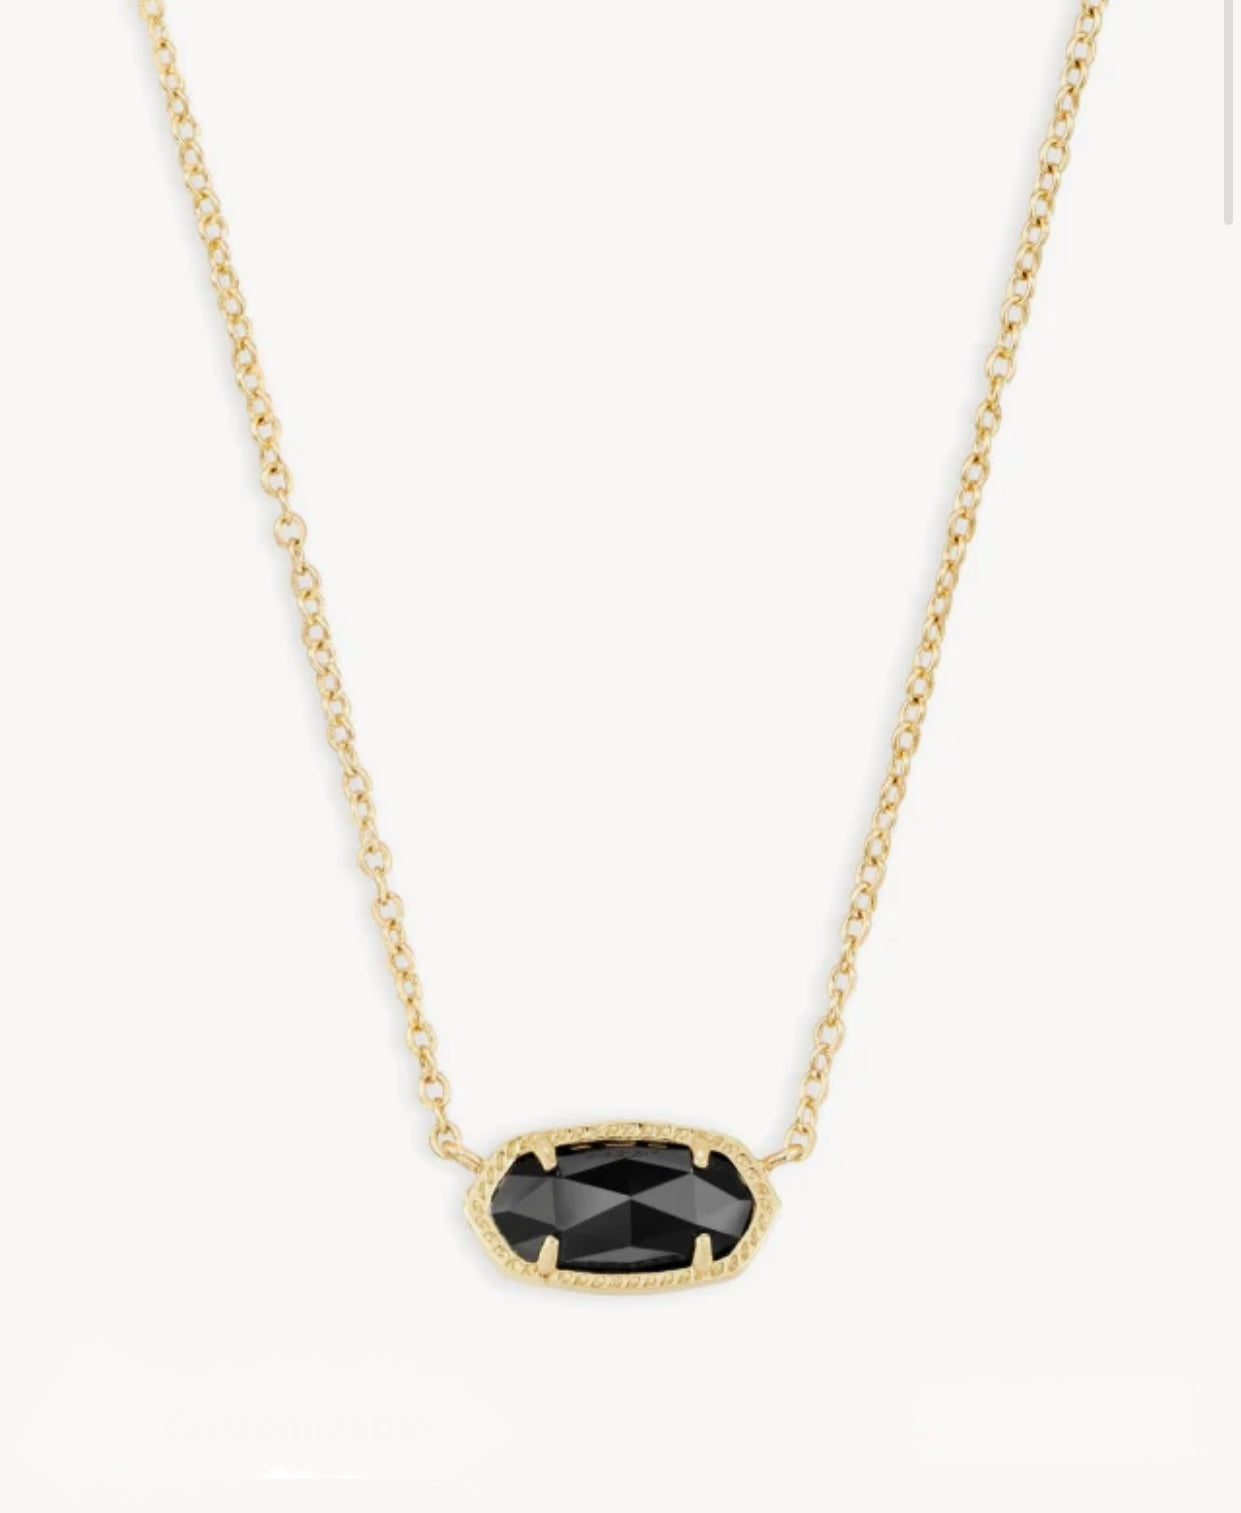 Elisa Black Opaque Glass Pendant Gold Necklace